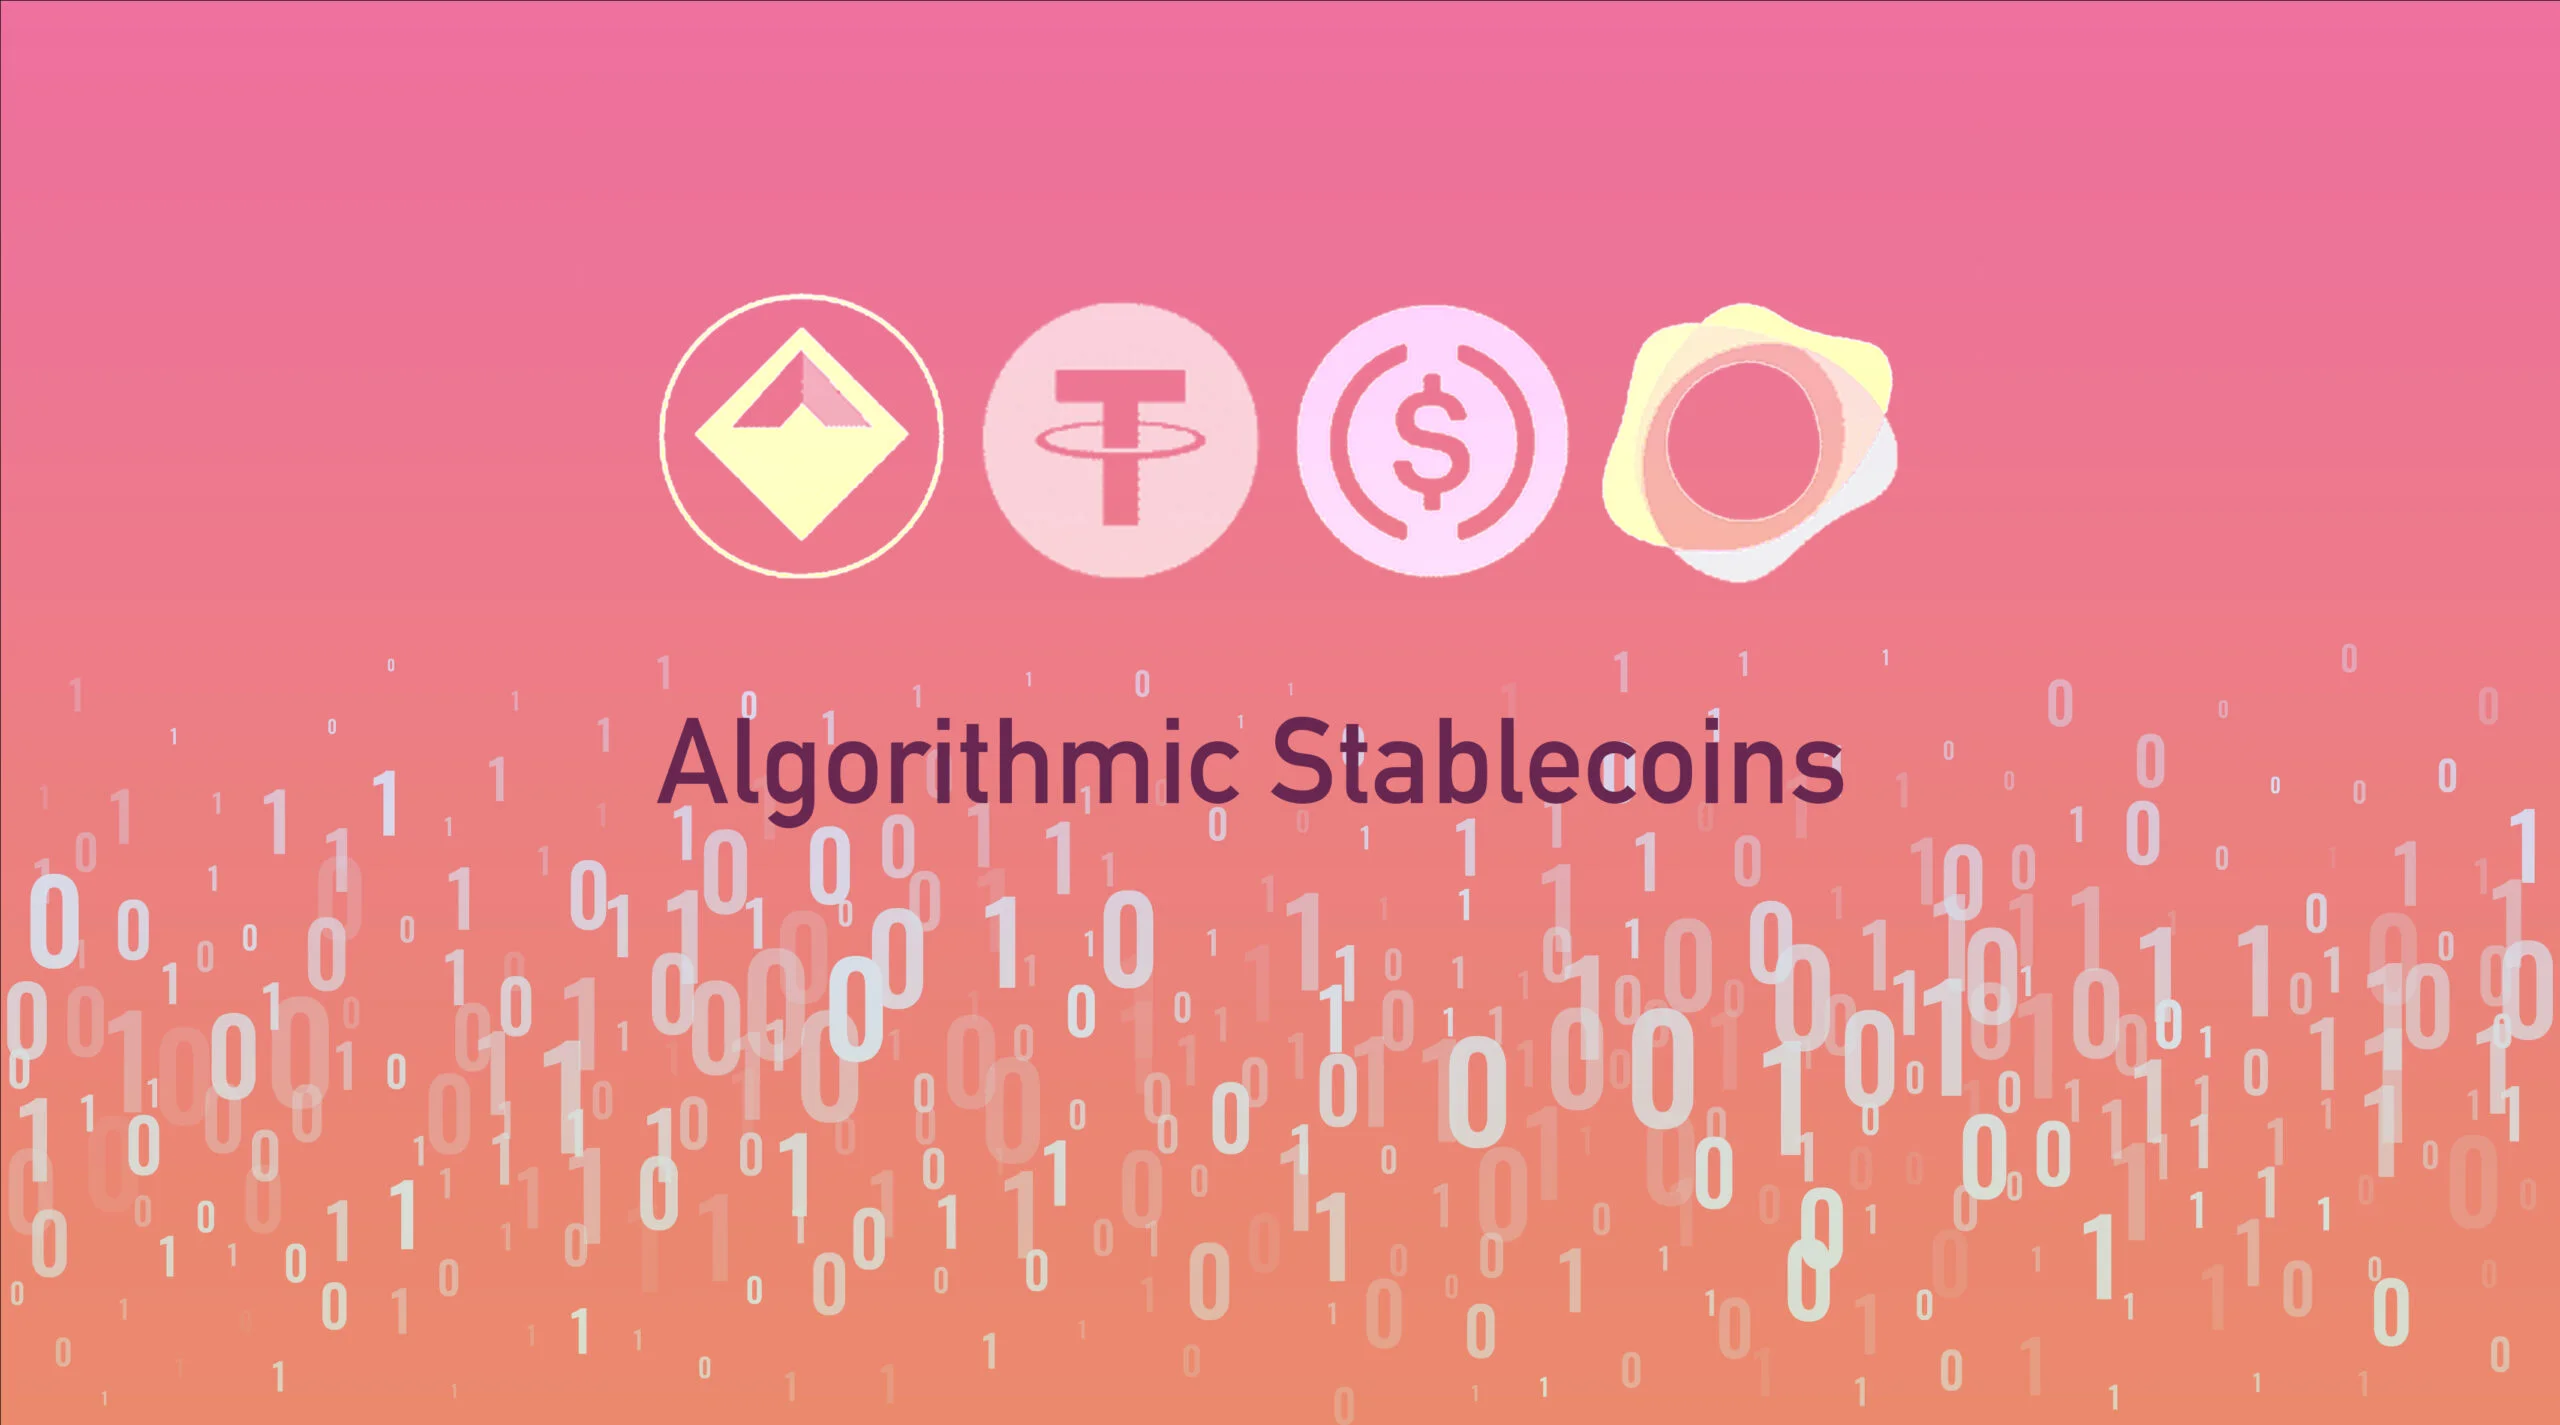 Algorithmic Stablecoins